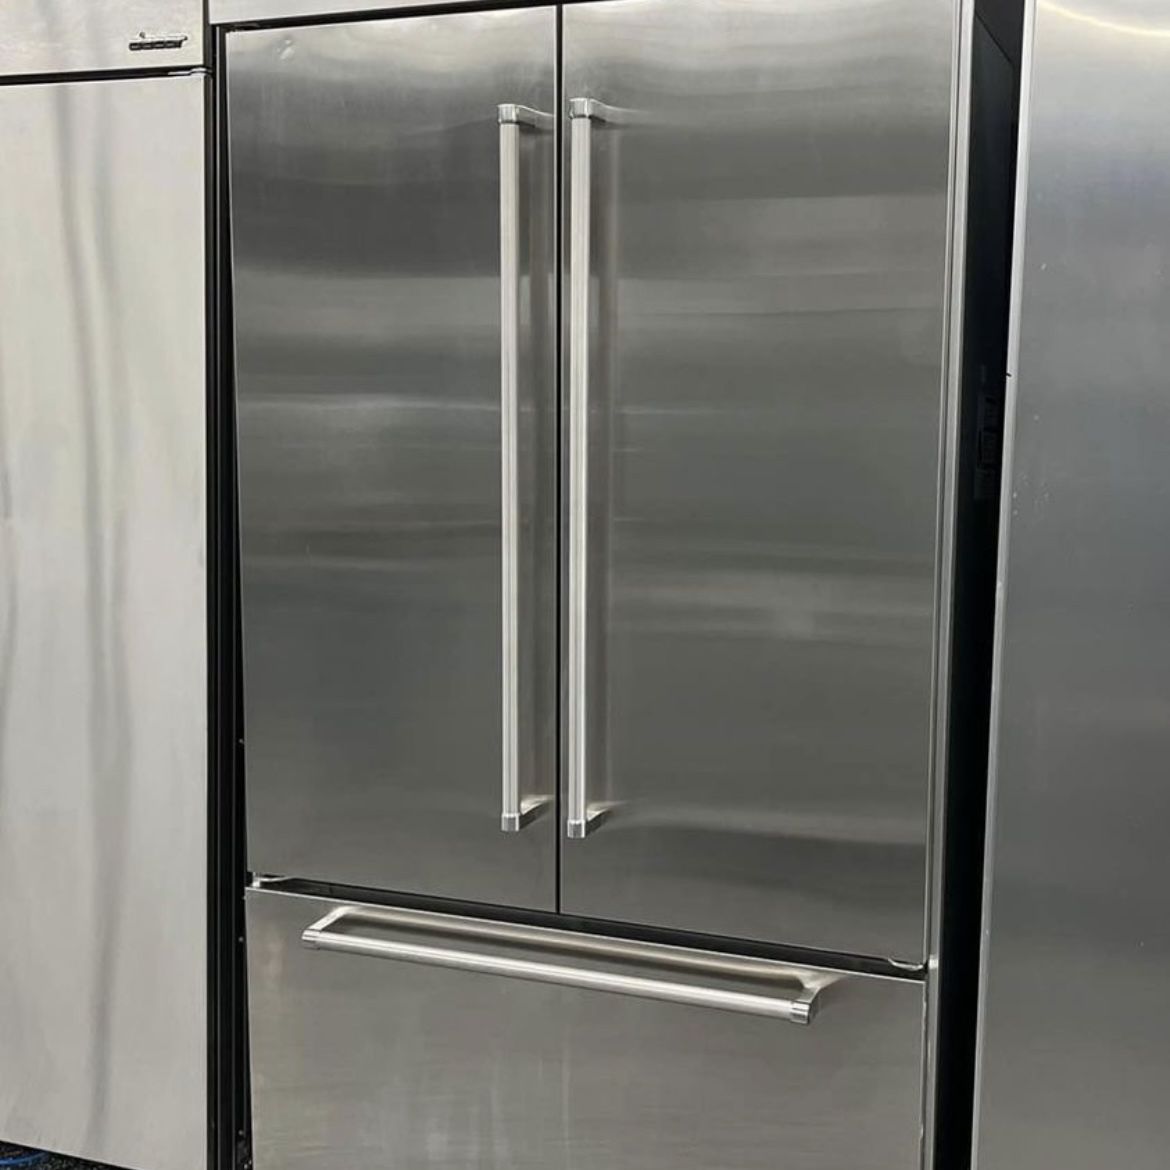 KitchenAid 42” French Door Built In Refrigerator 